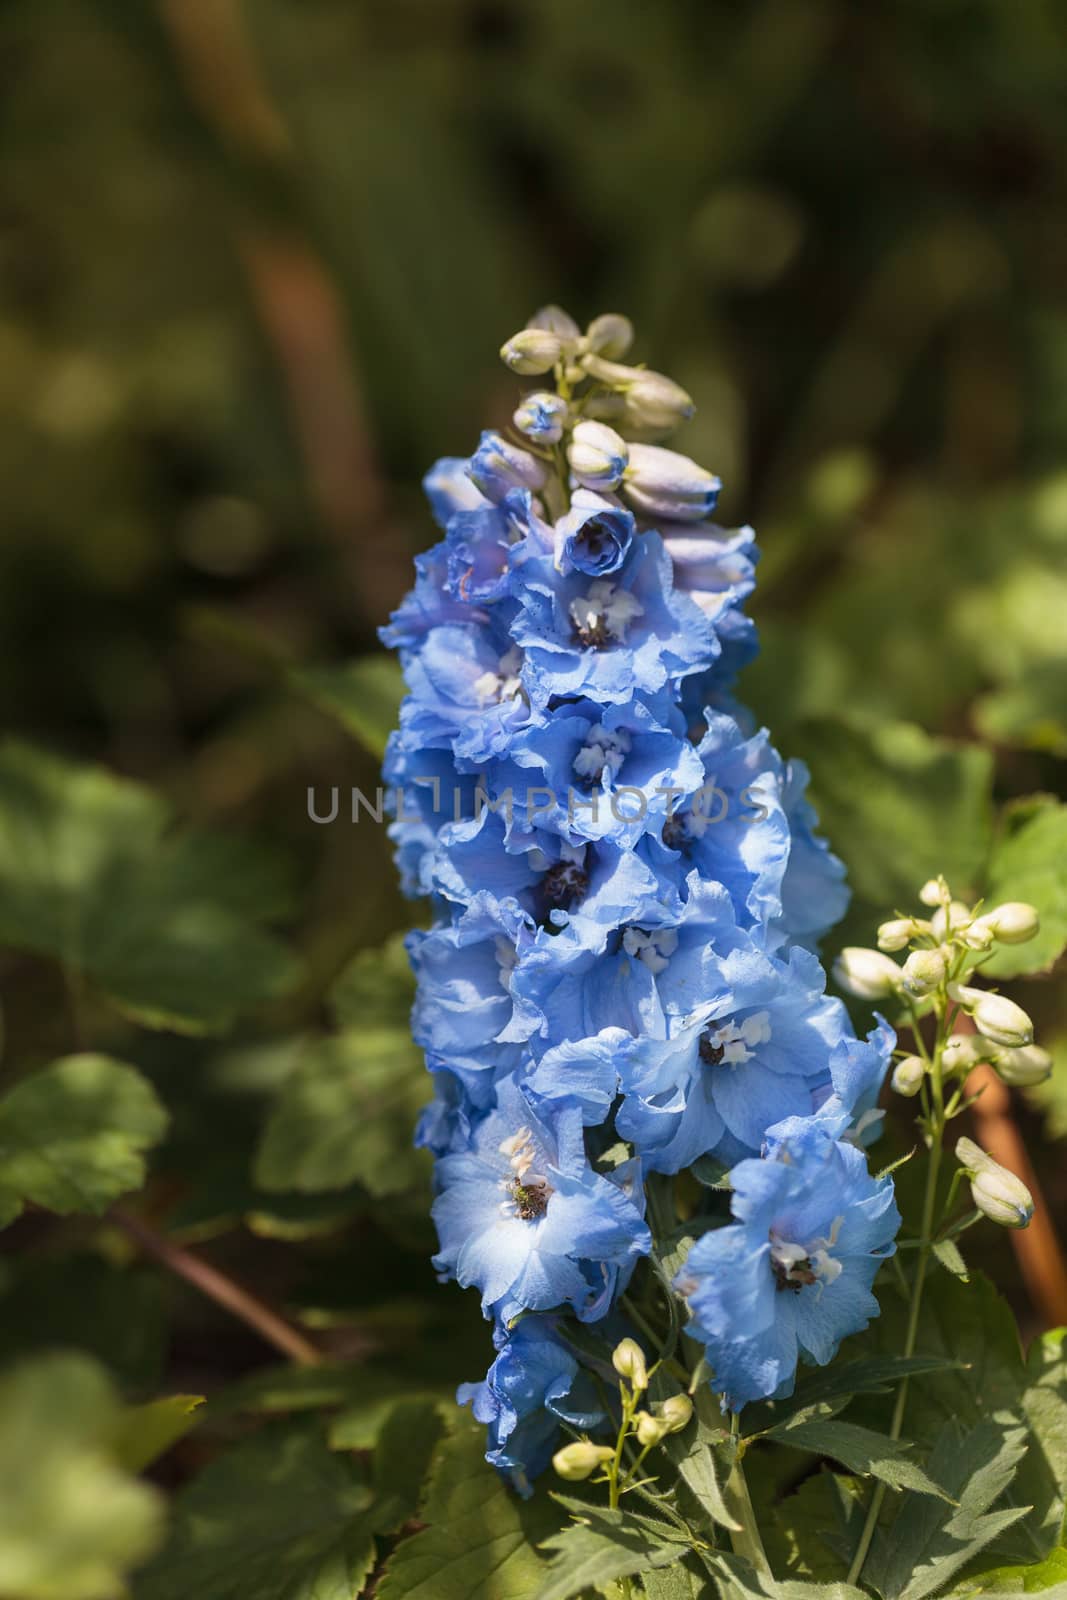 Delphinium blue bird flowers blooms in a botanical garden in spring.